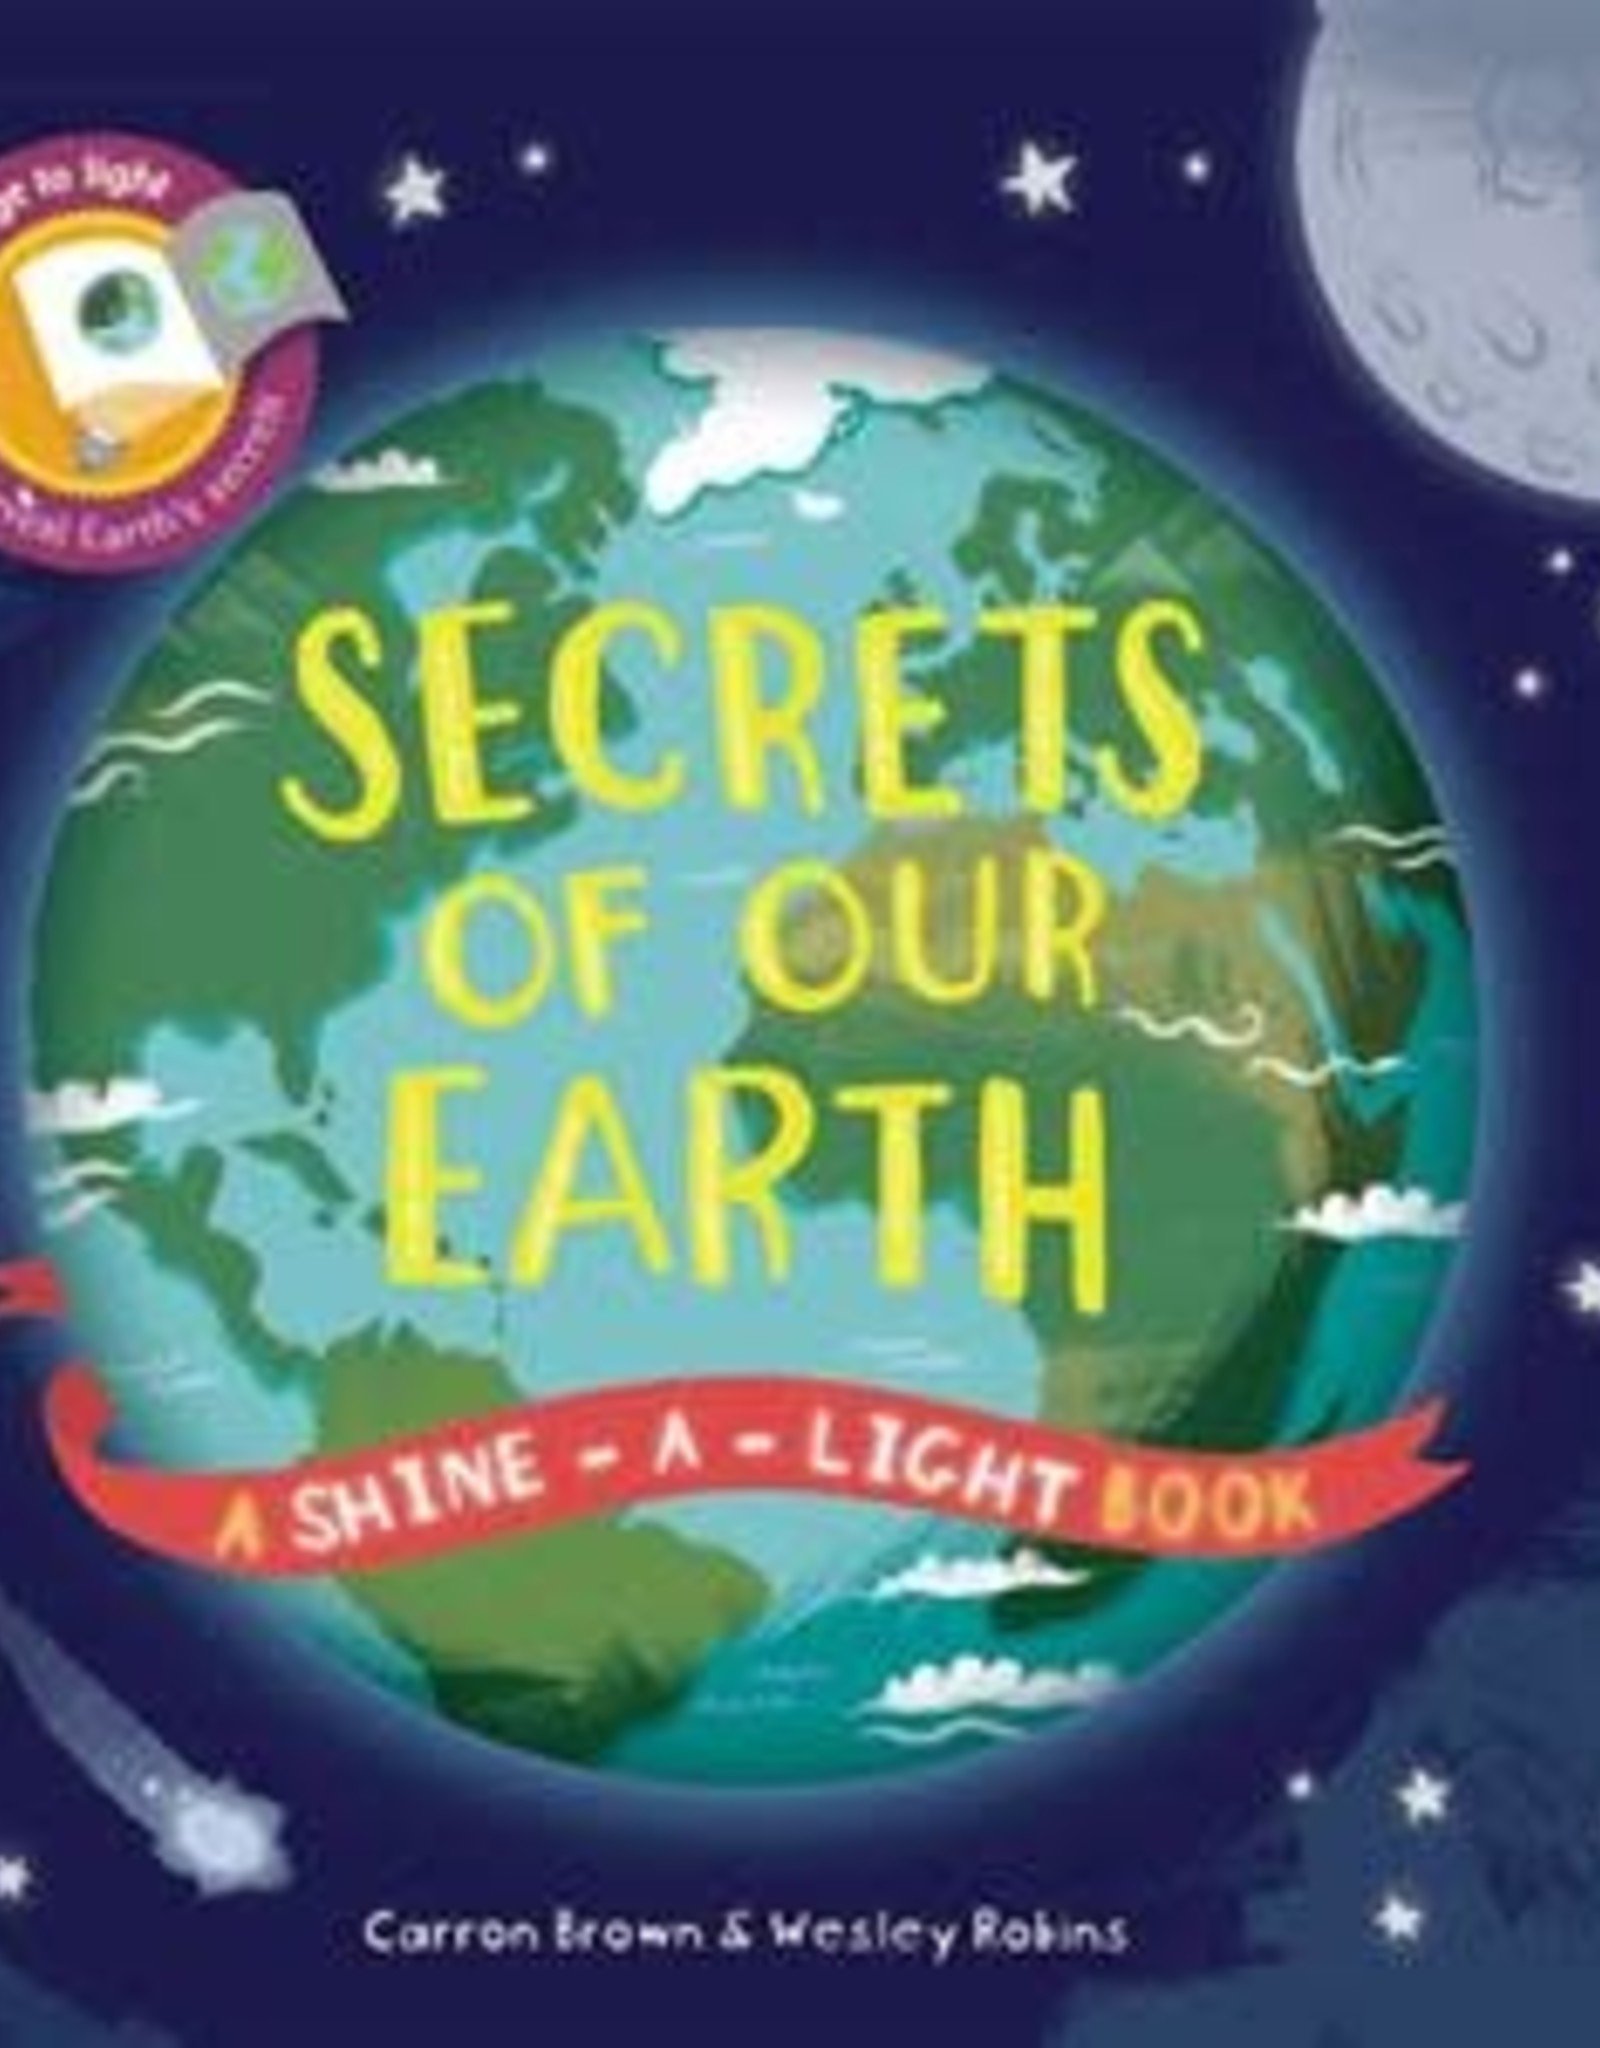 Shine-a-Light; Secrets Of Our Earth